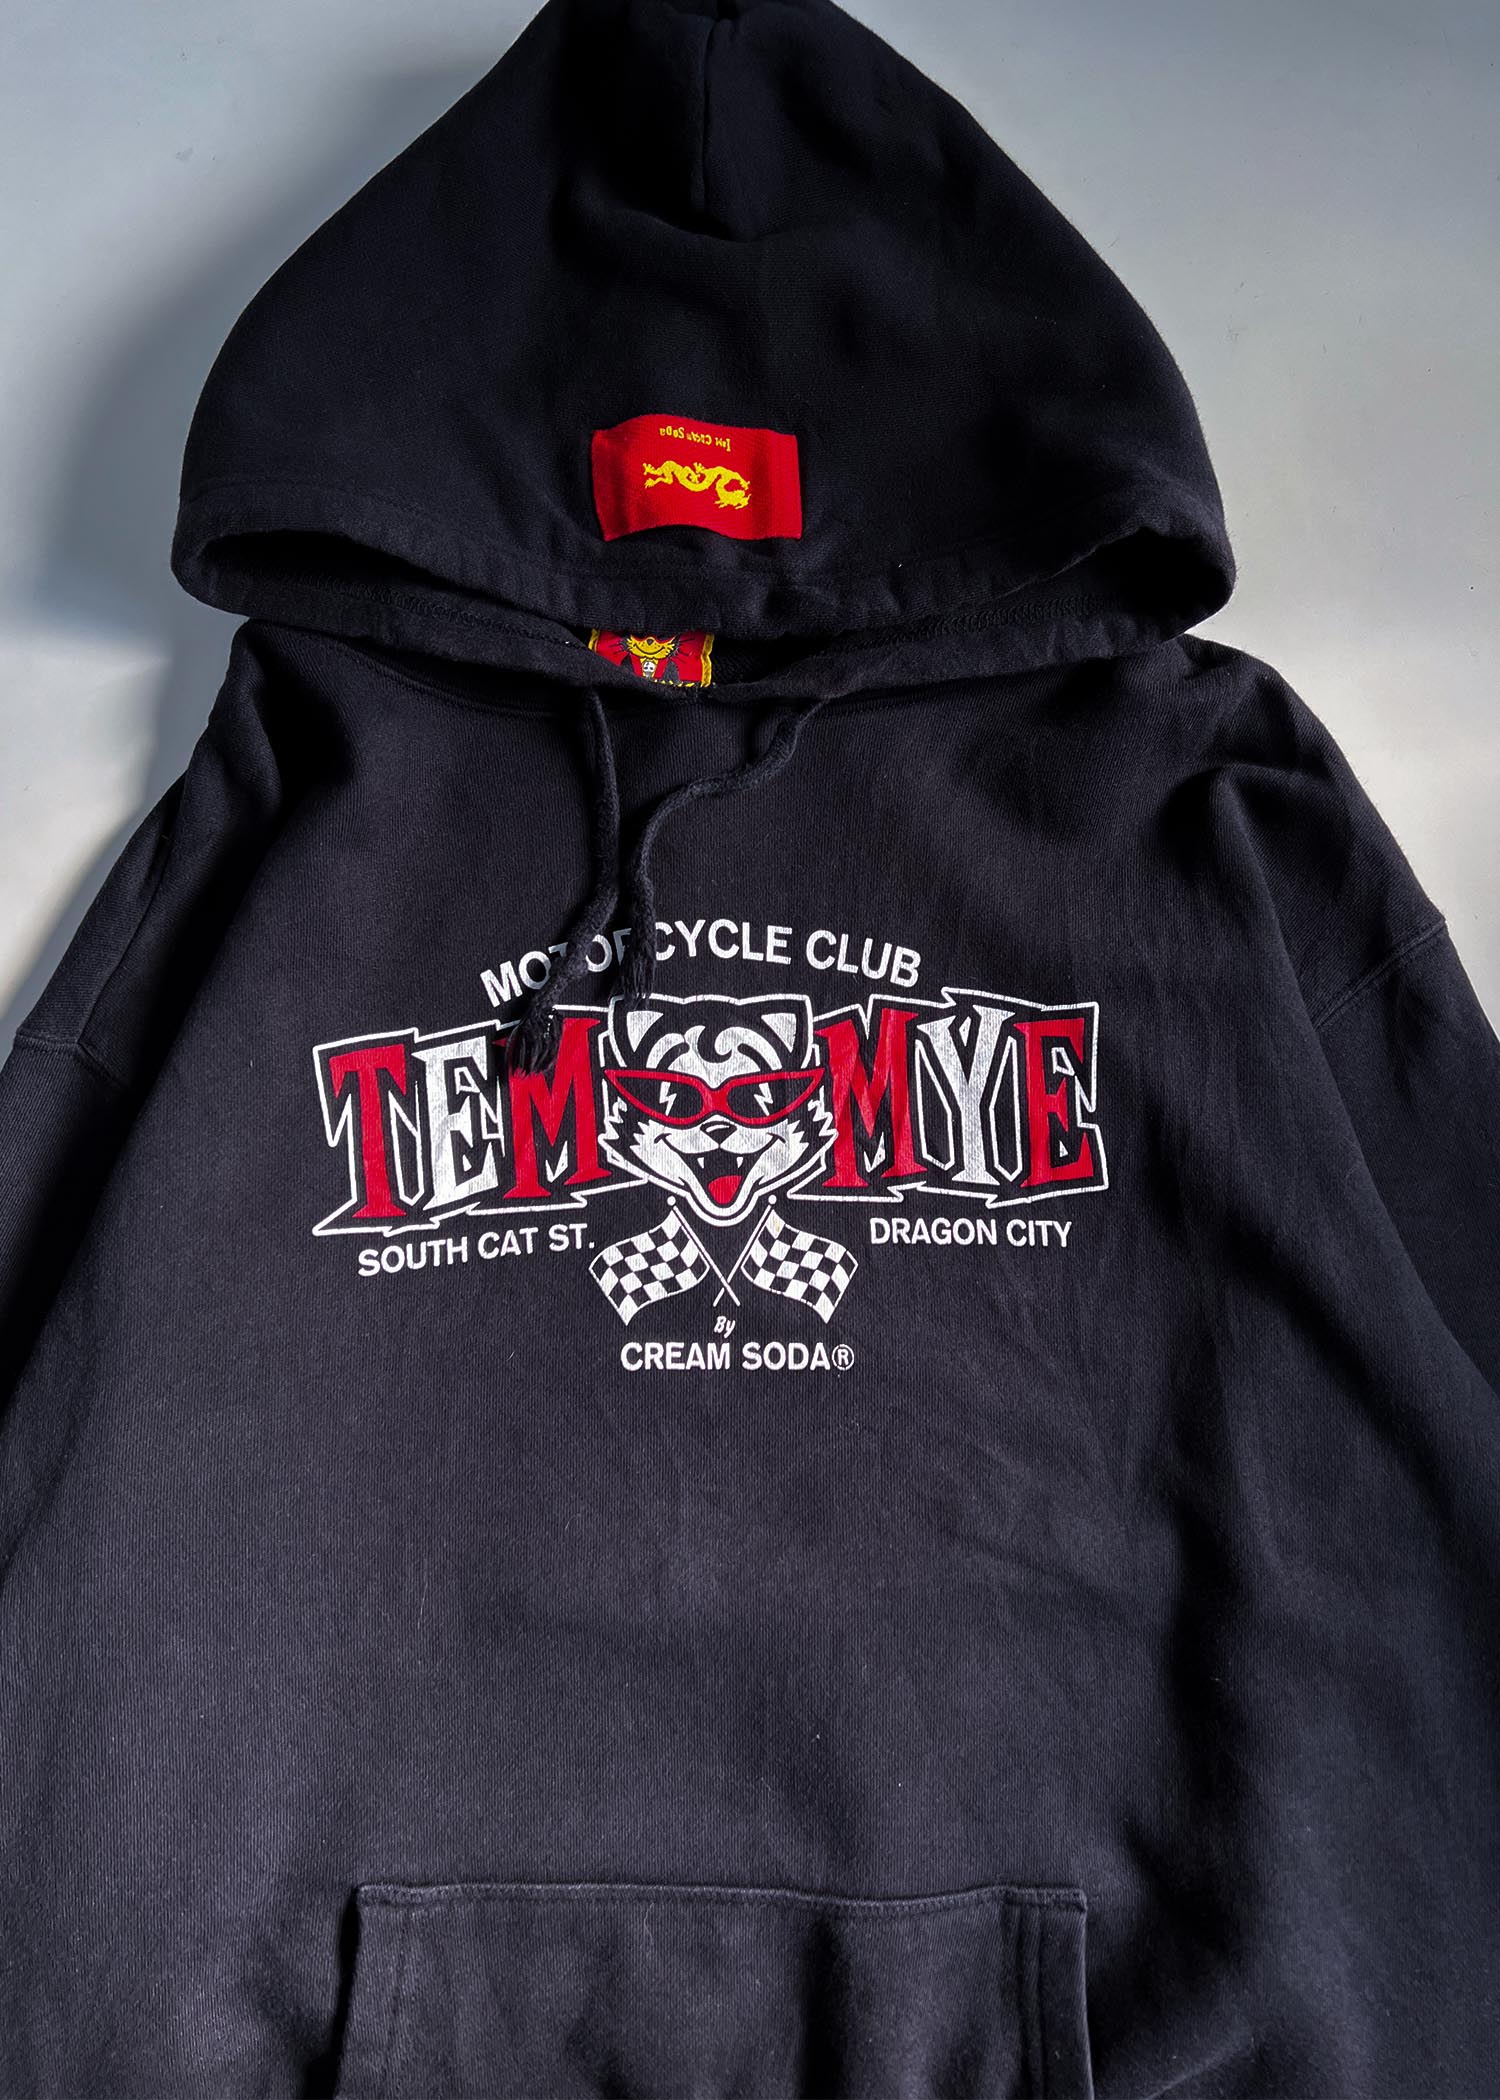 TEMMYE by CREAM SODA hoodie